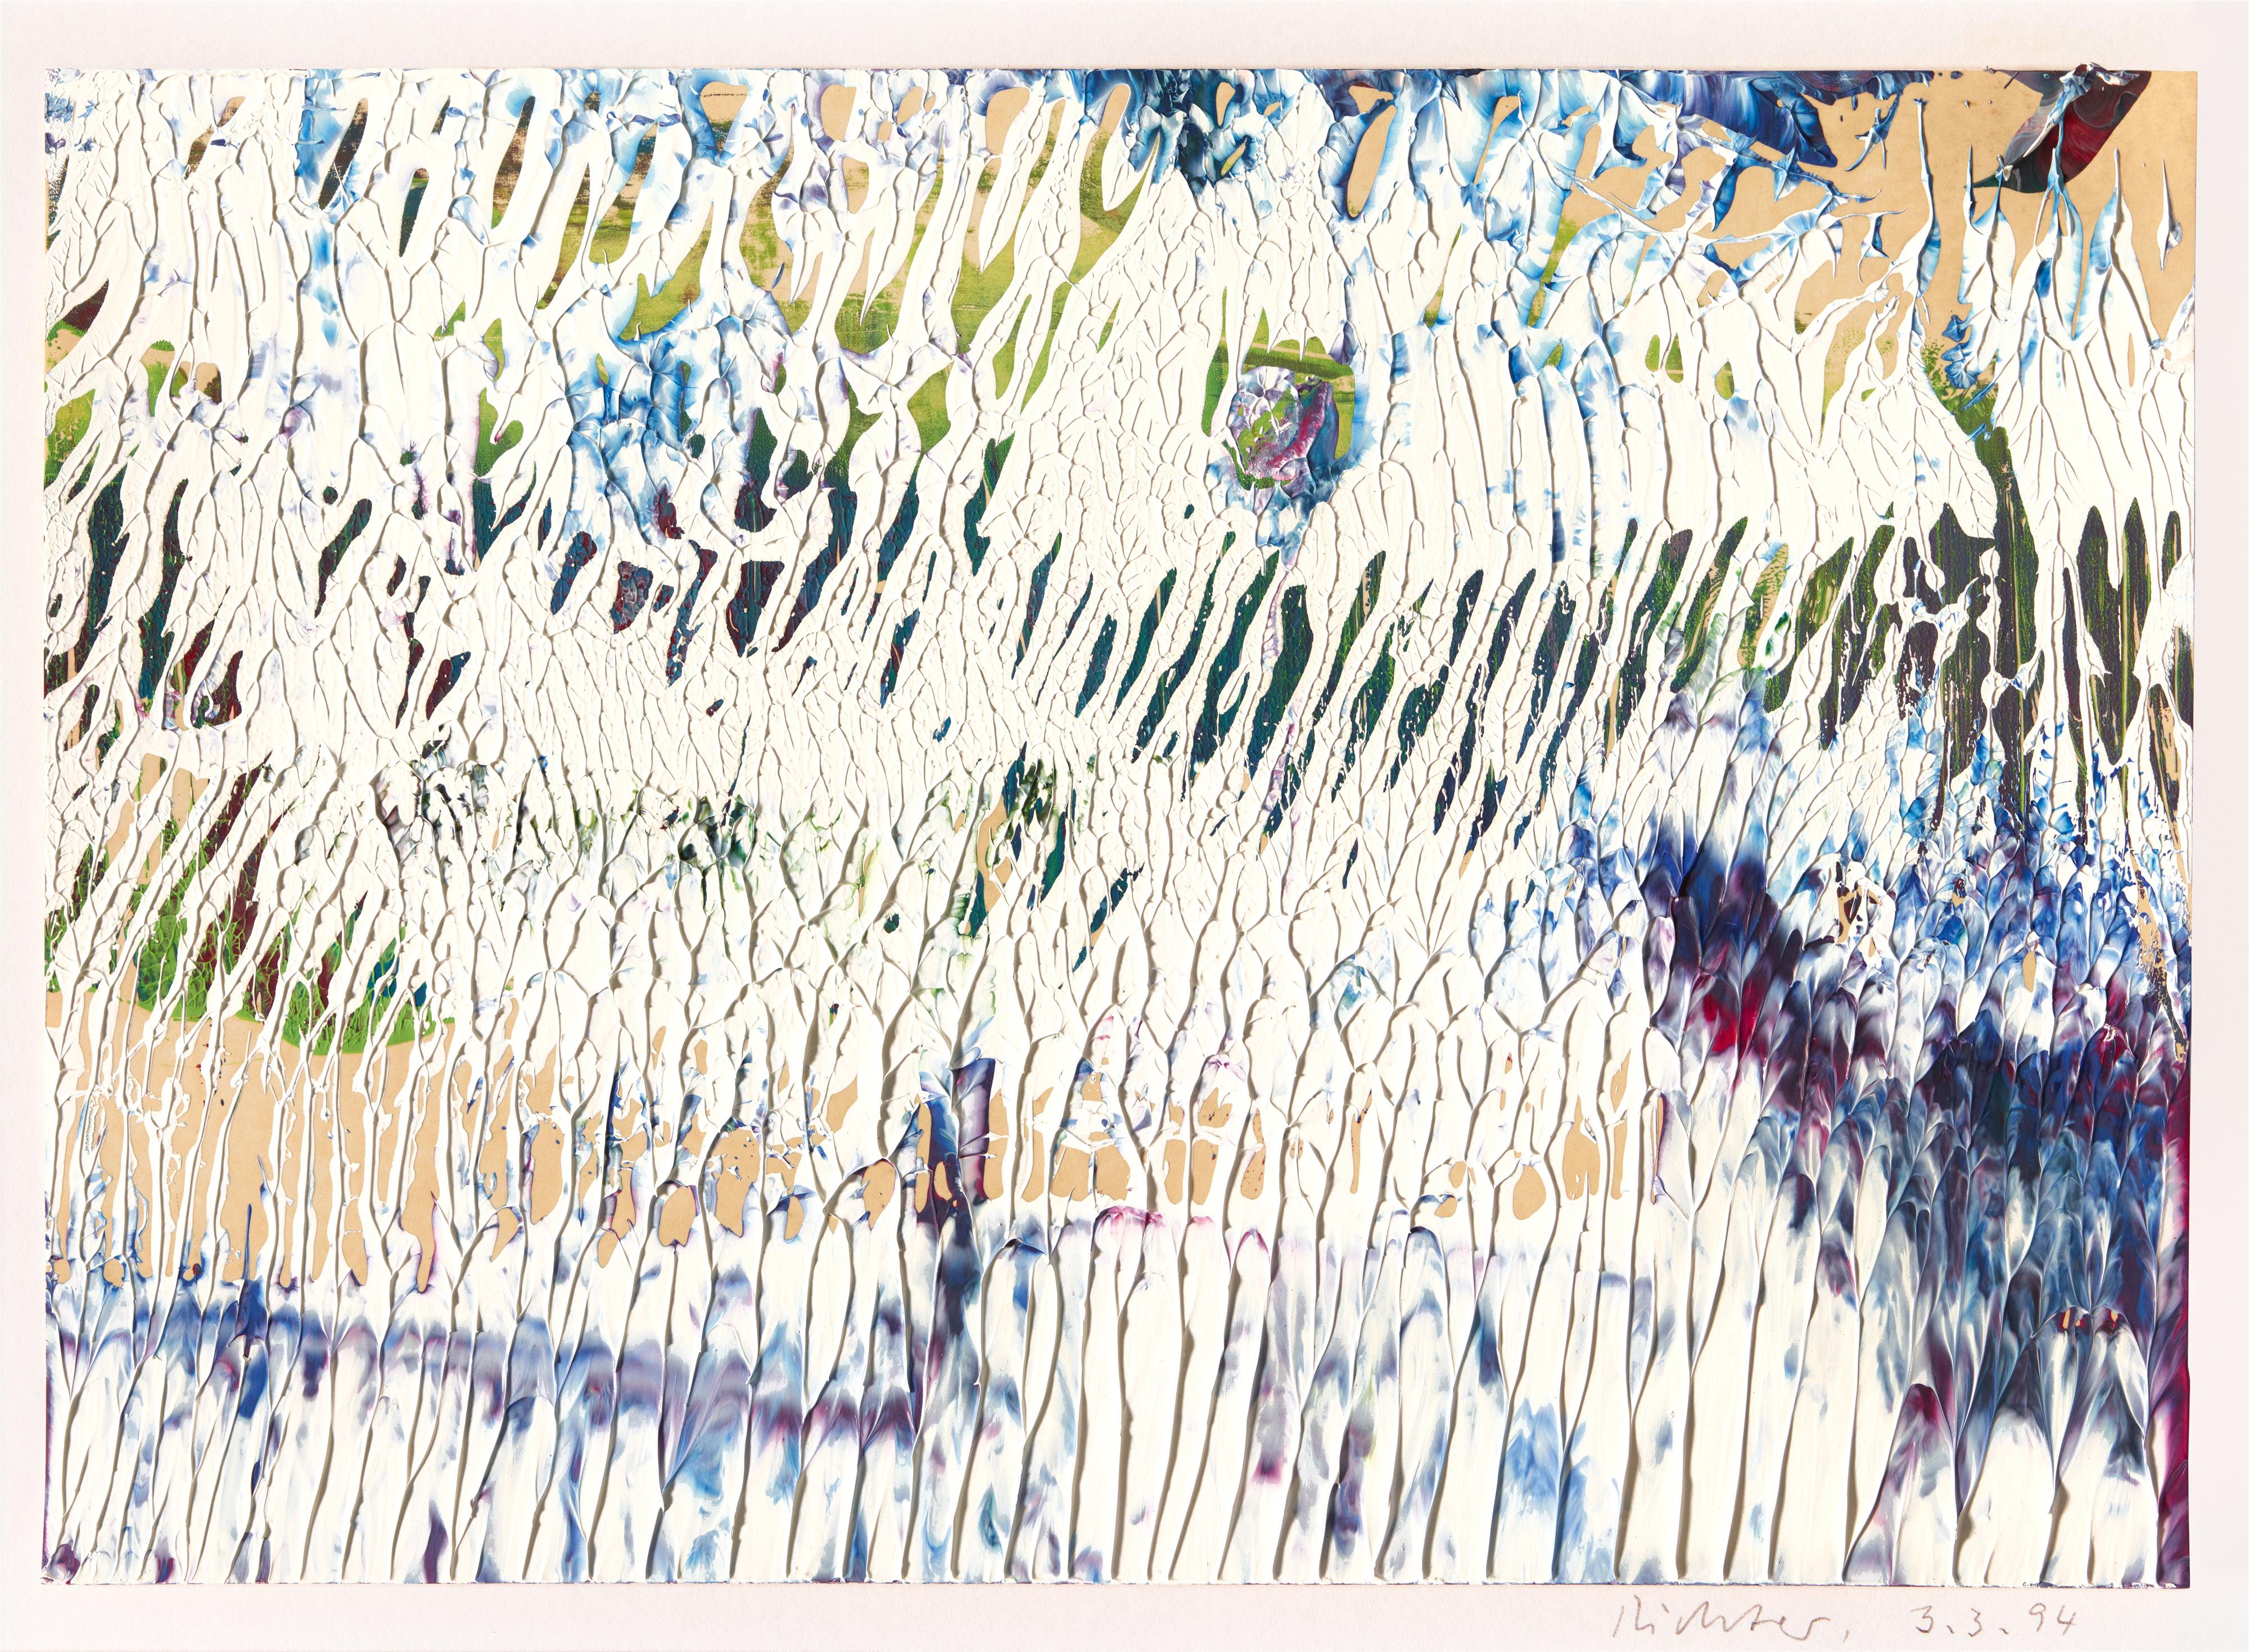 Gerhard Richter - 3.3.94 - image-1